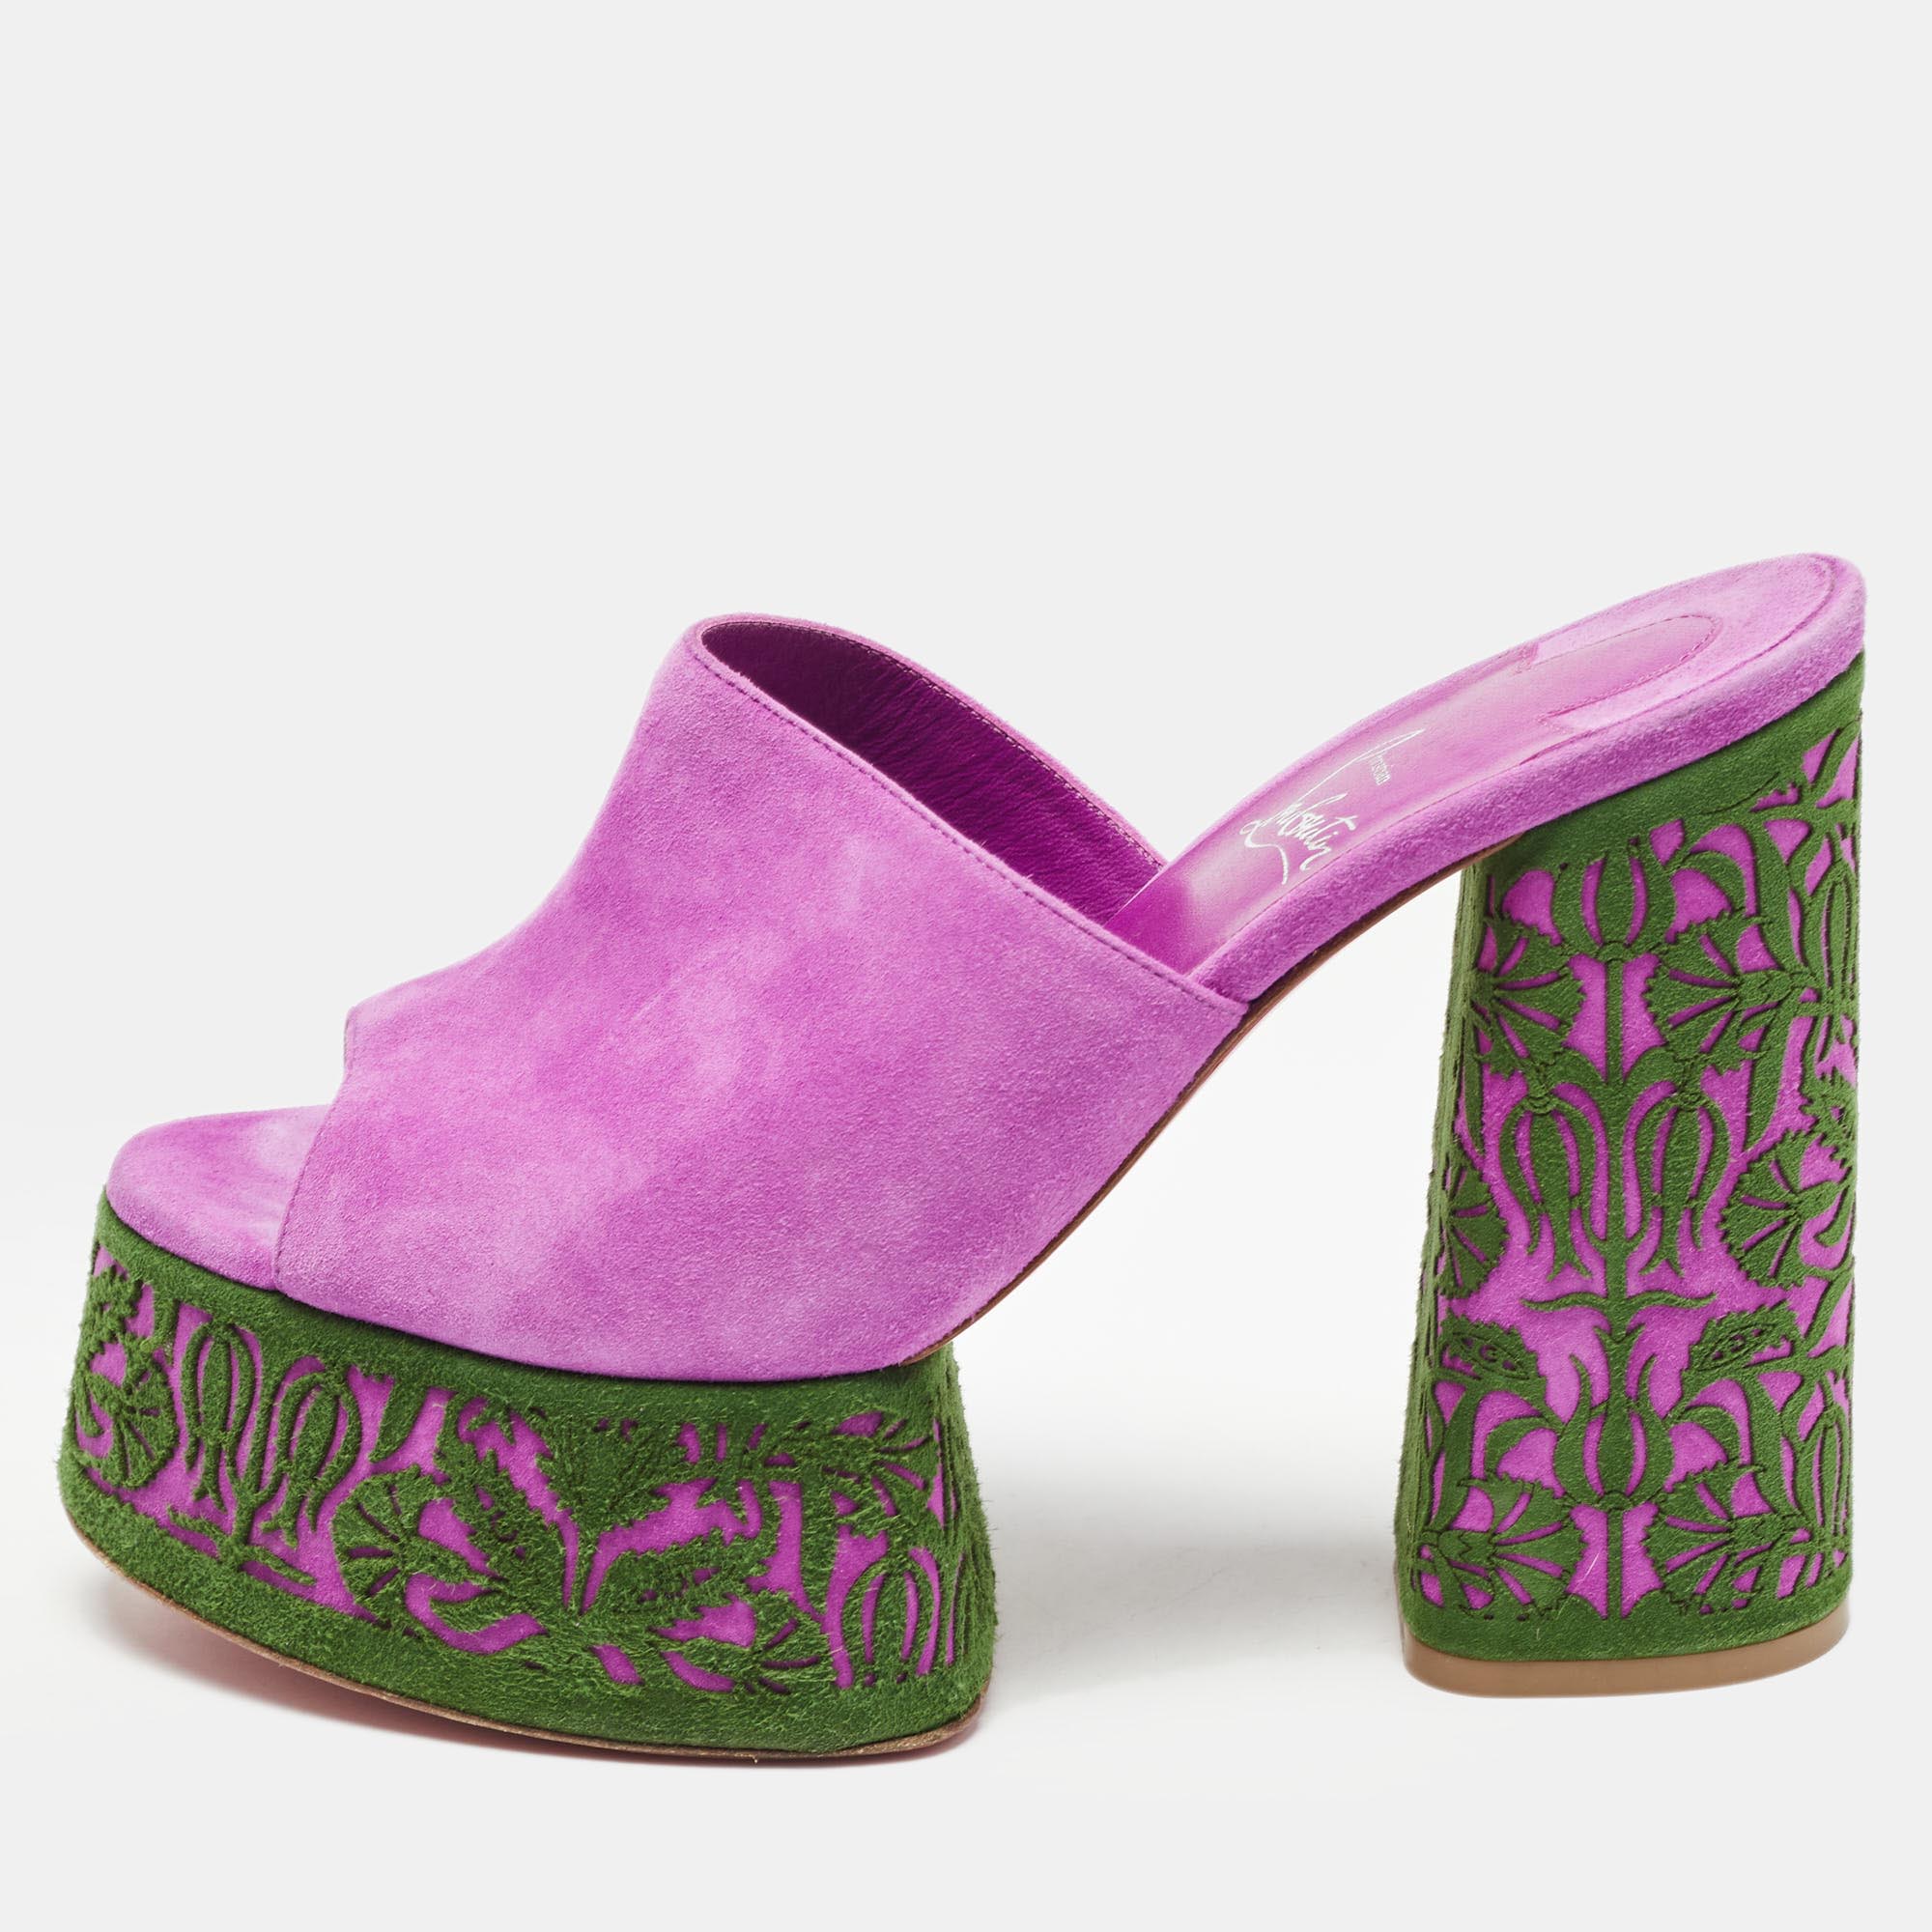 Christian louboutin purple suede platform slide sandals size 38.5